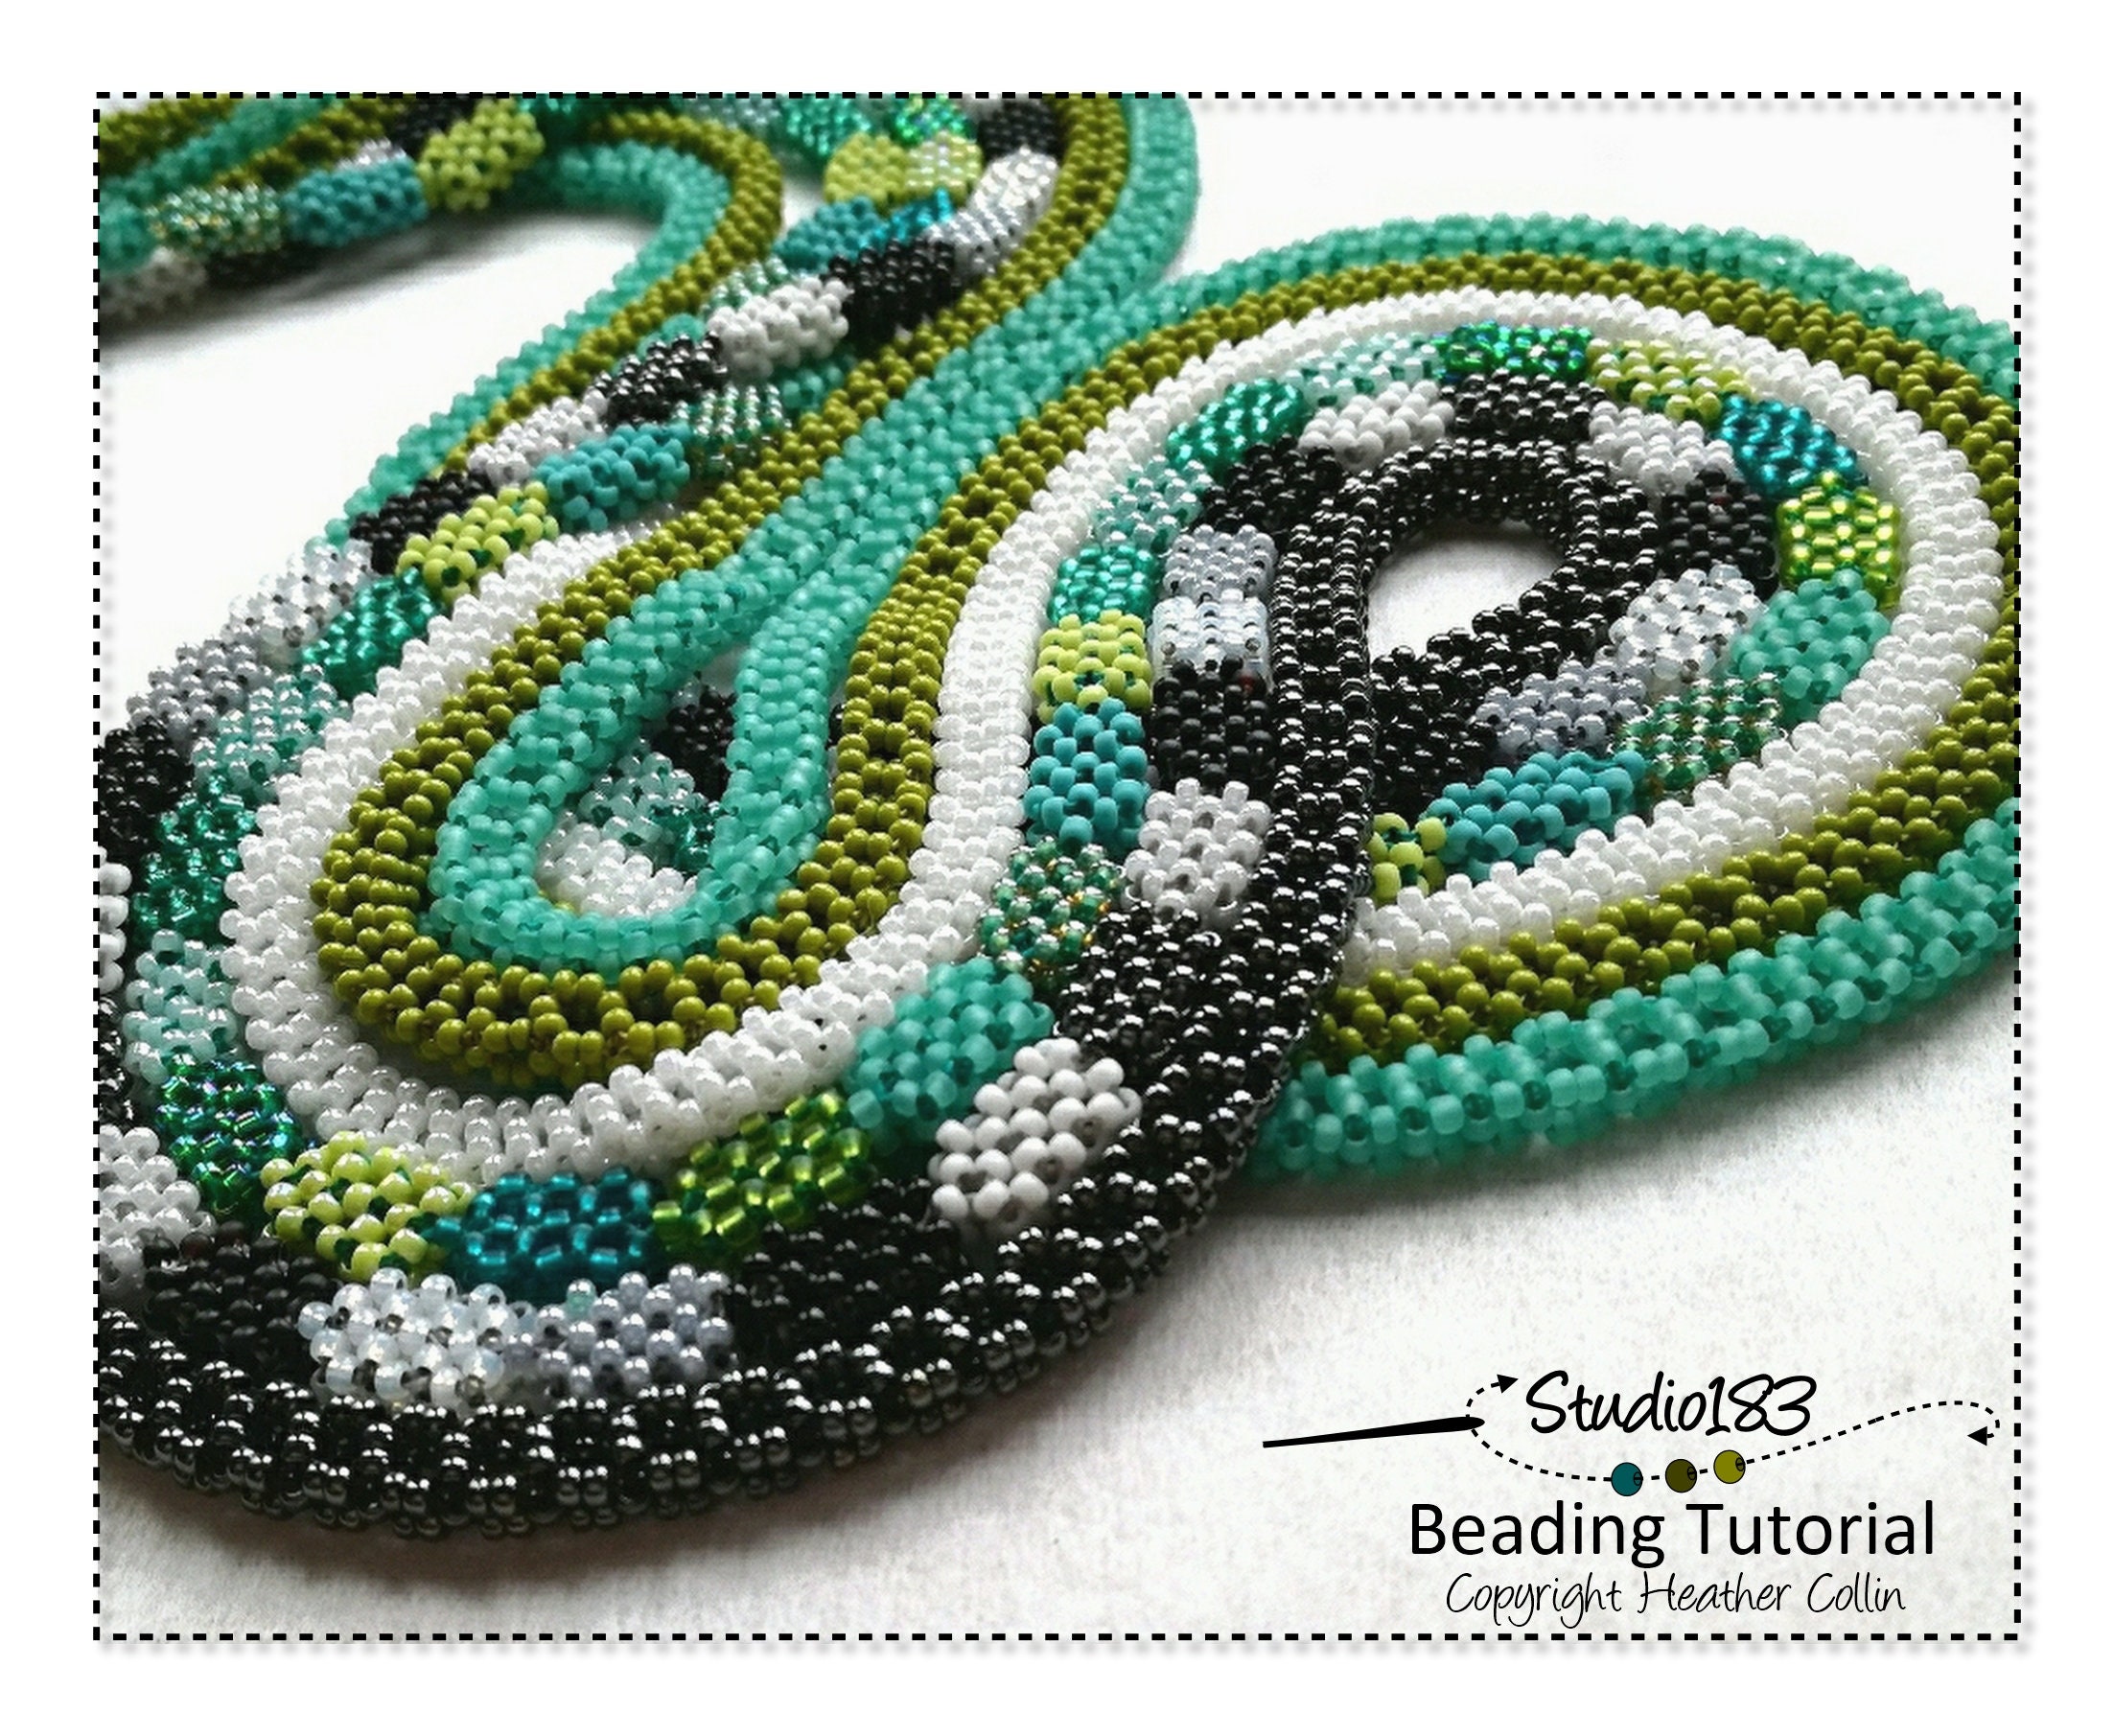 64 Pieces Charm Bracelet Making Kit Including Jewelry Beads Snake